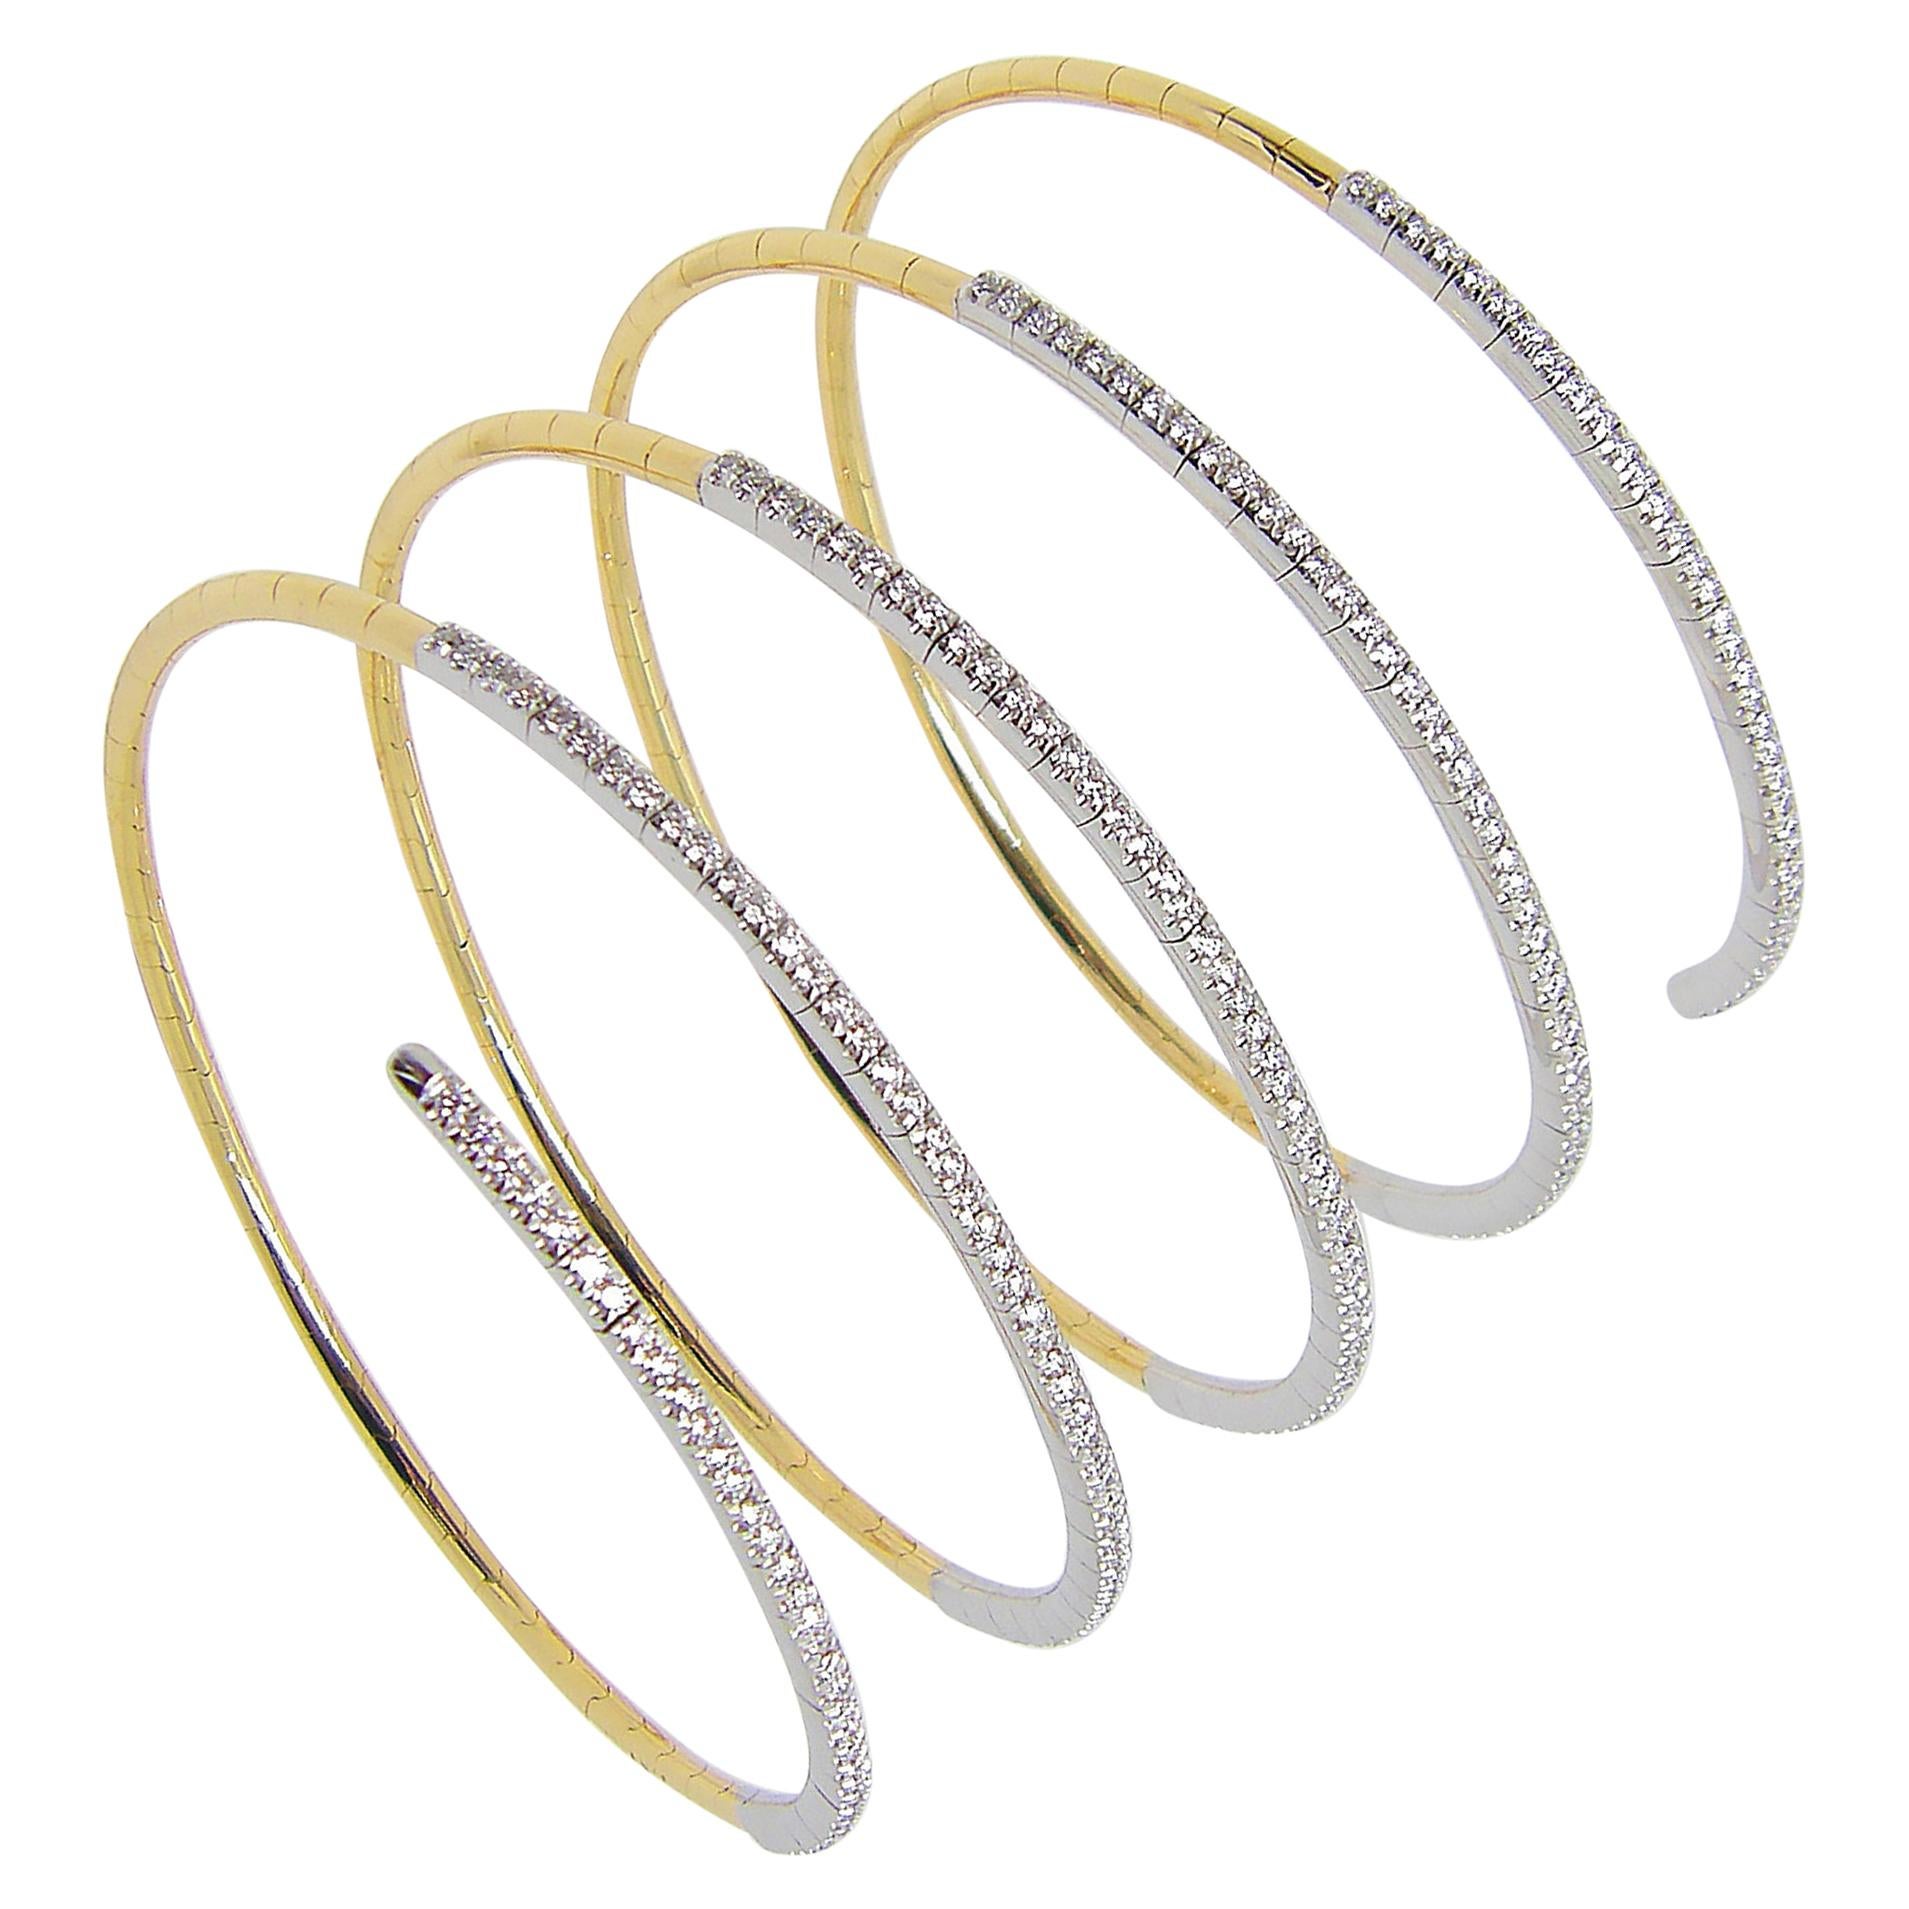 Georgios Collections 18 Karat White & Yellow Gold Diamond Flexible Wide Bracelet